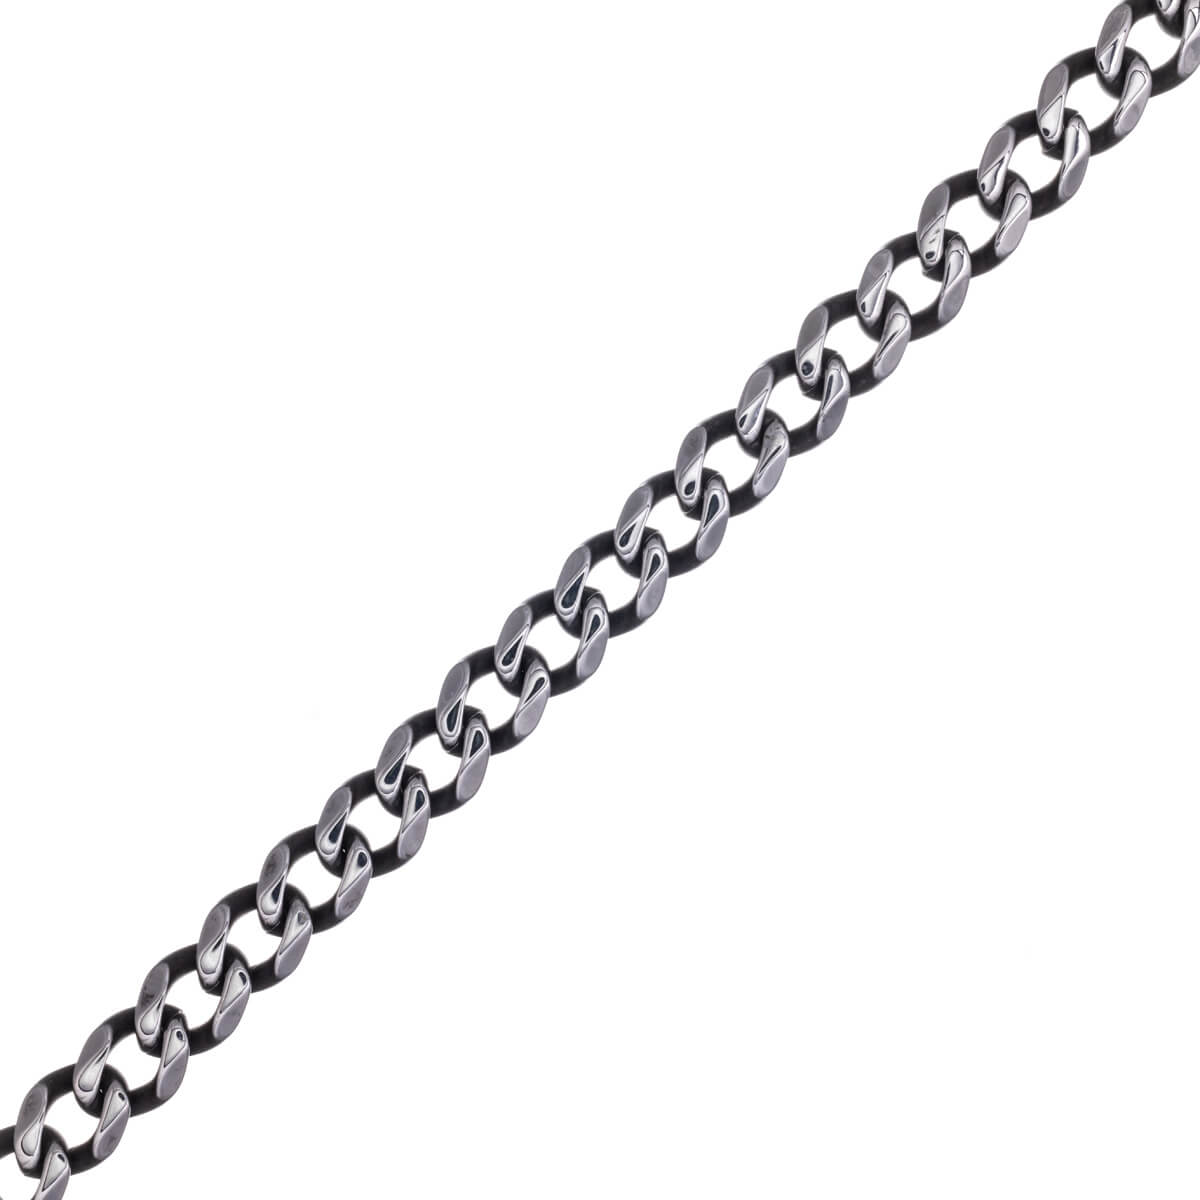 Flat armoured chain dark steel necklace 8mm 55cm